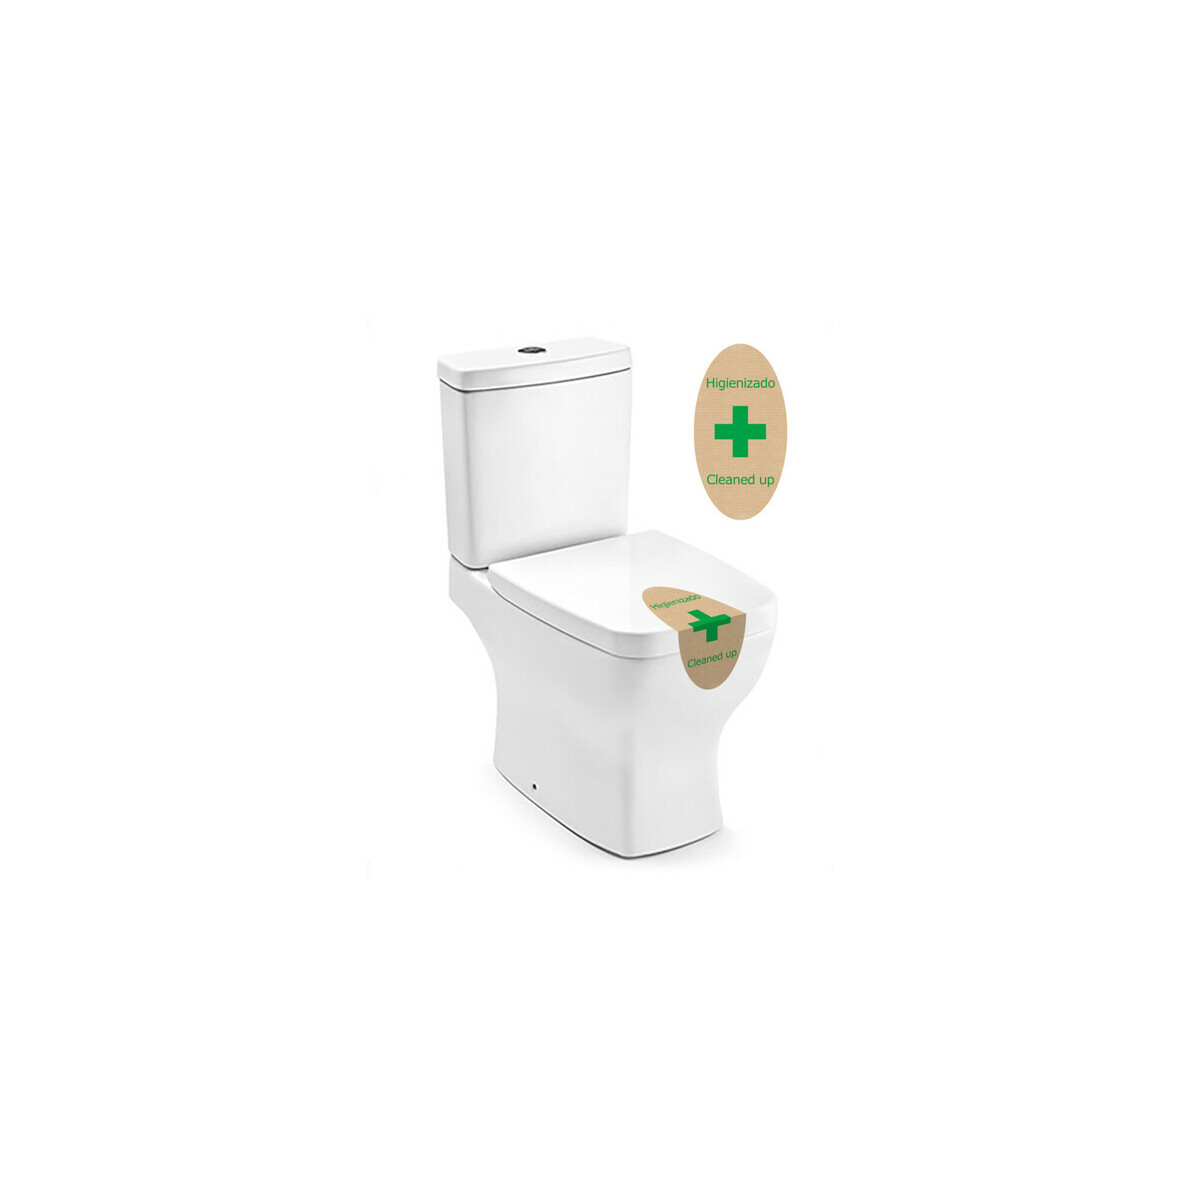 Sceau de garantie WC (autocollant et amovible)